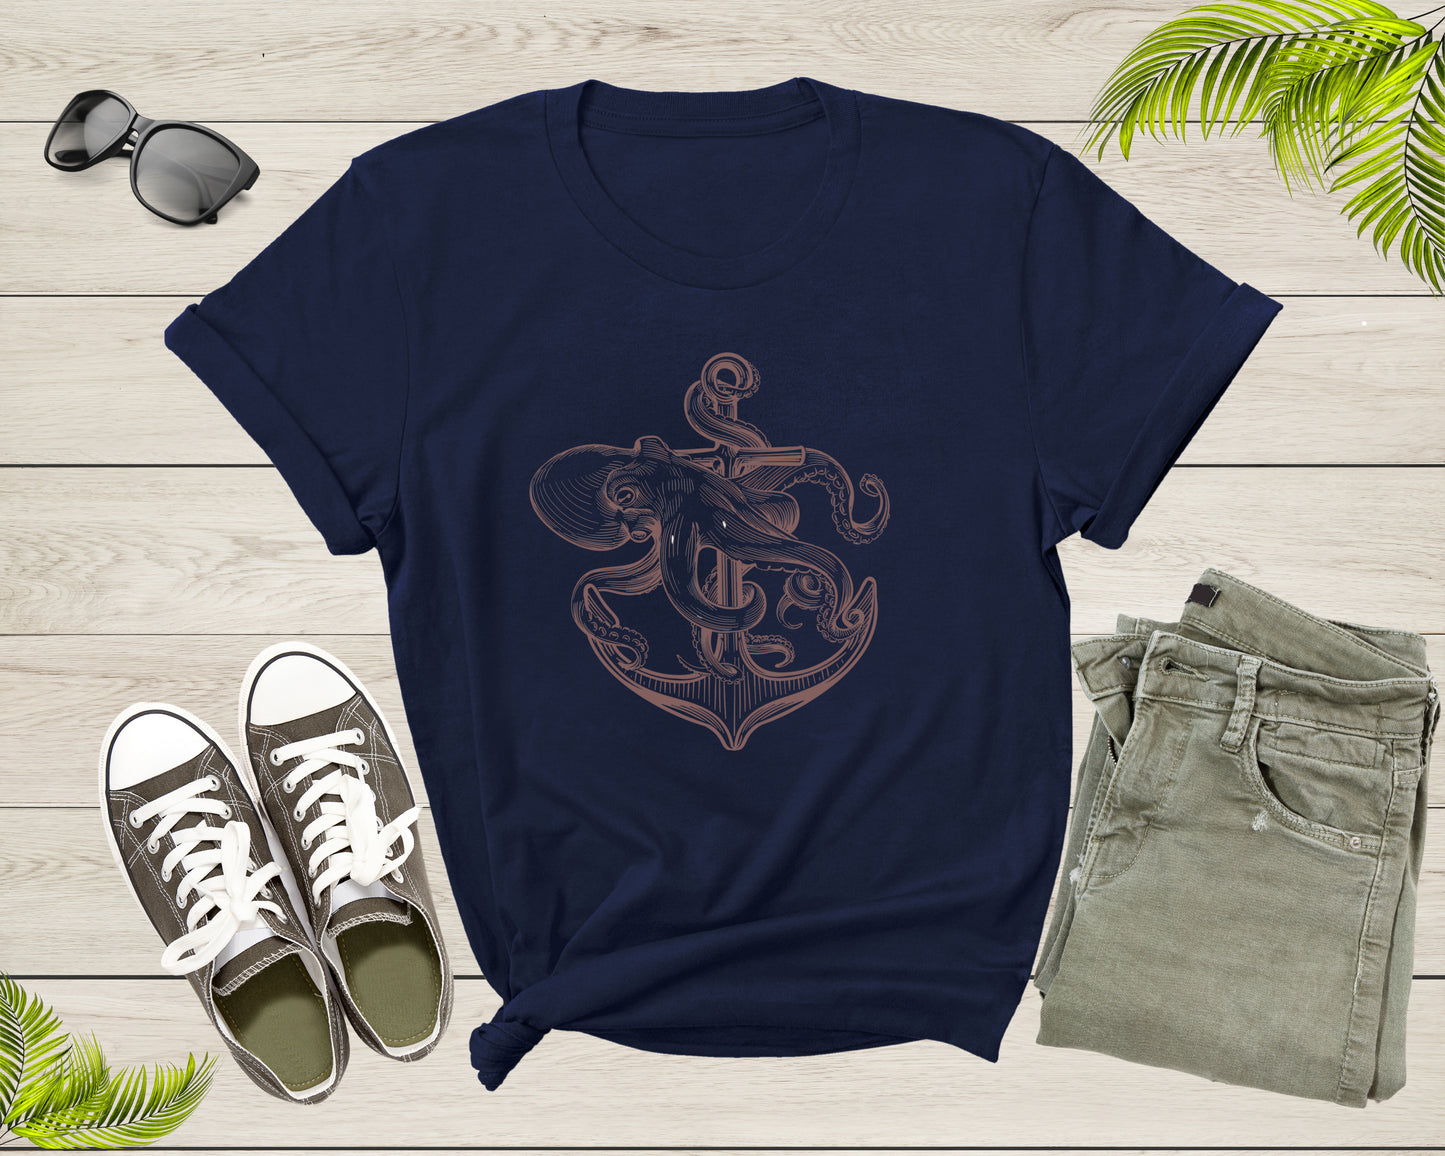 Cute Sea Ocean Octopus Holding Ship Metal Anchor in Ocean T-Shirt Octopus Lover Gift T Shirt for Men Women Kids Boys Girls Graphic Tshirt